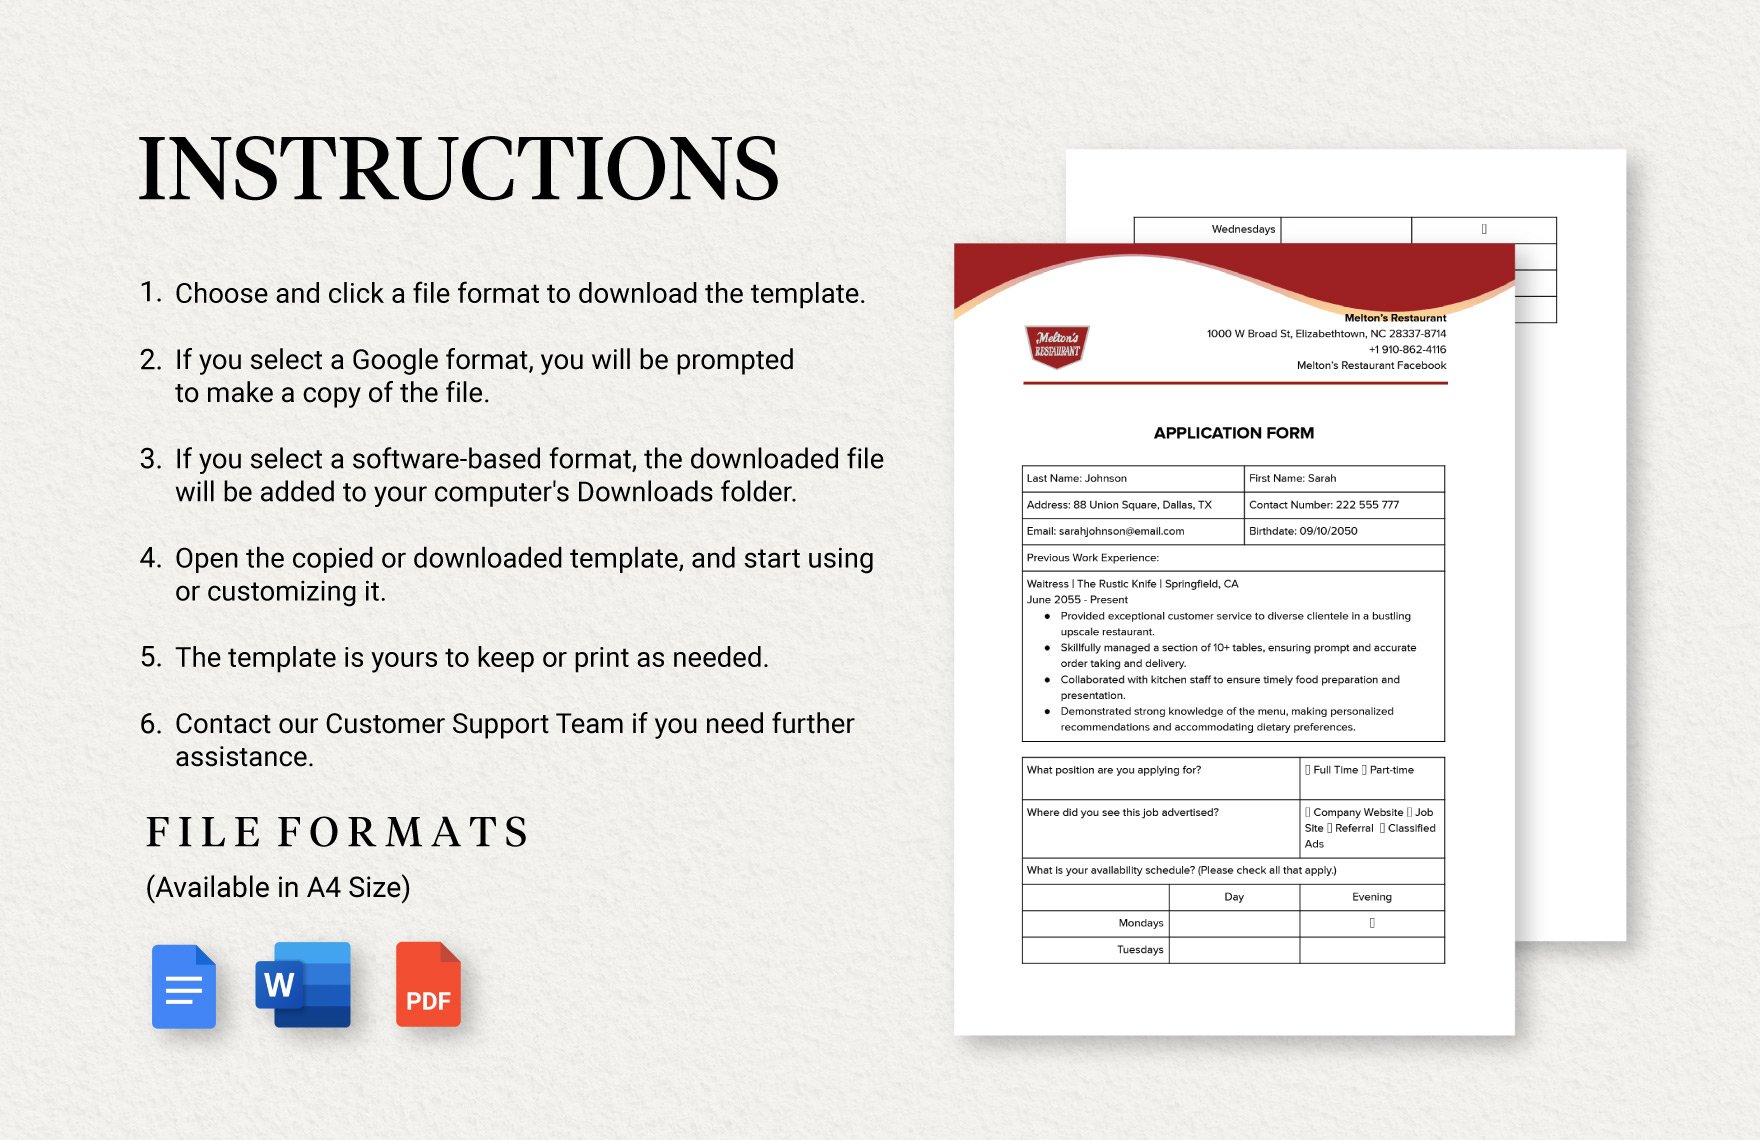 Melton's Restaurant Application Form Template